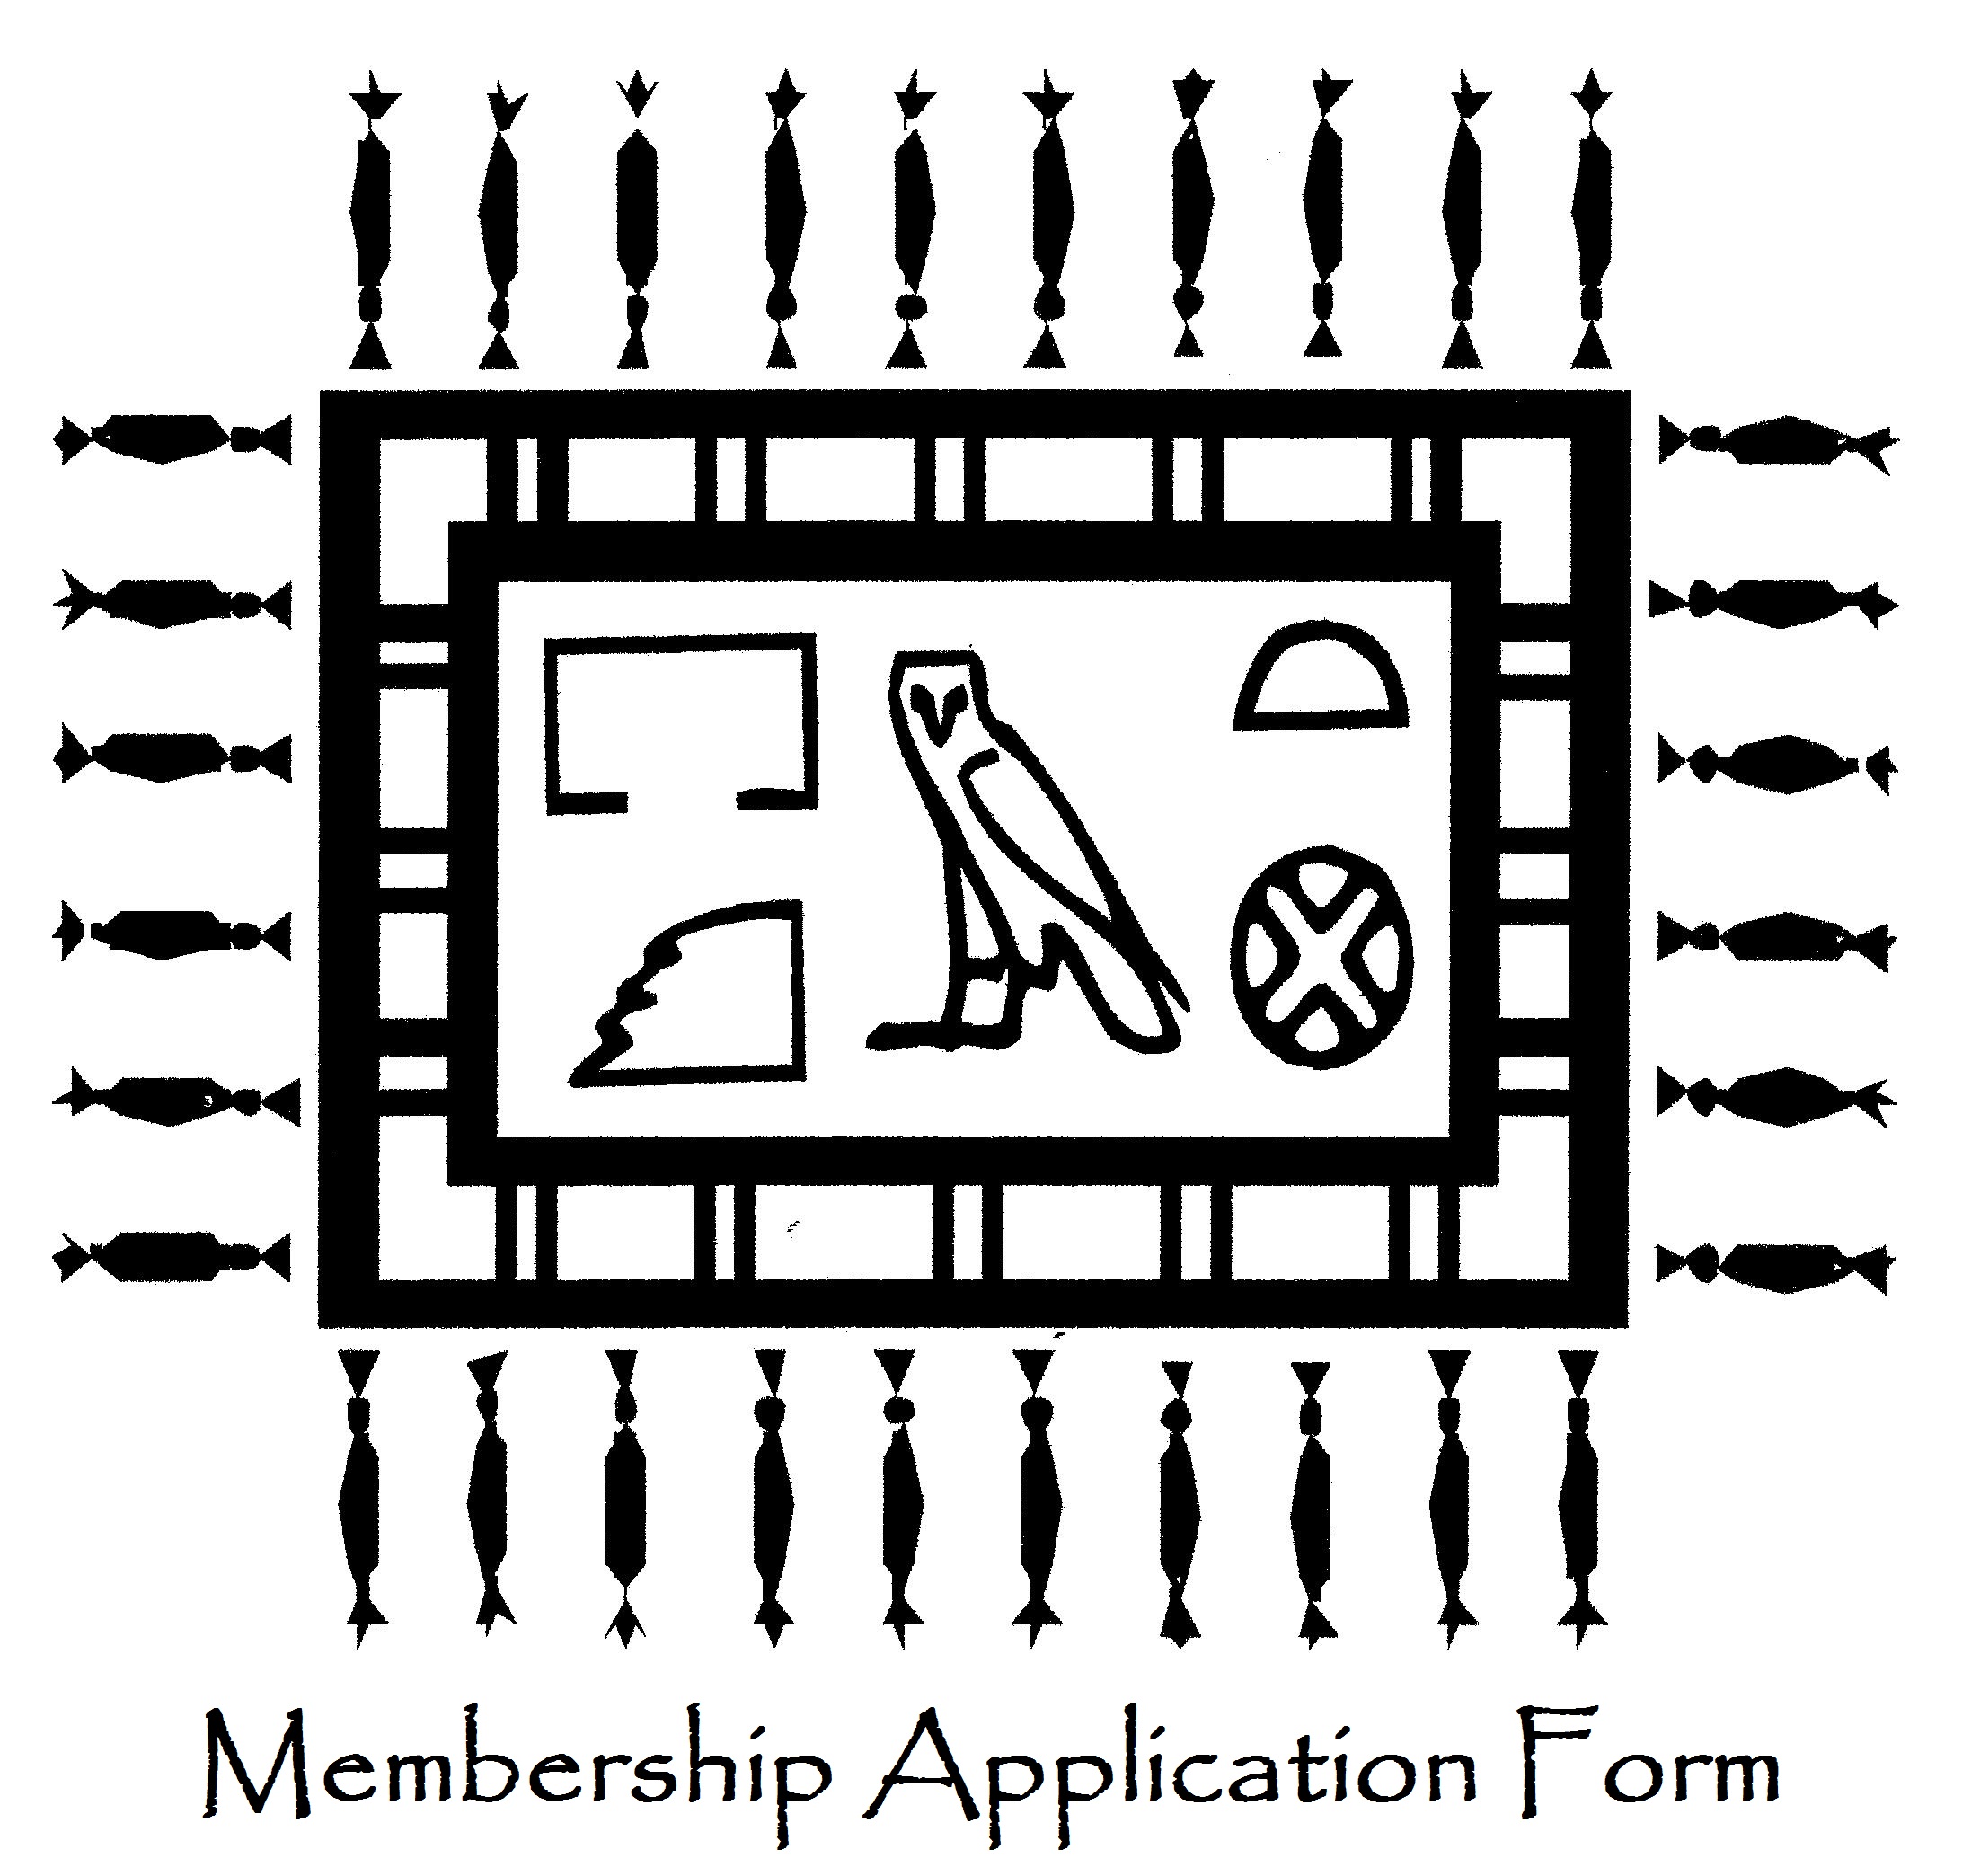 Membership application form image for website